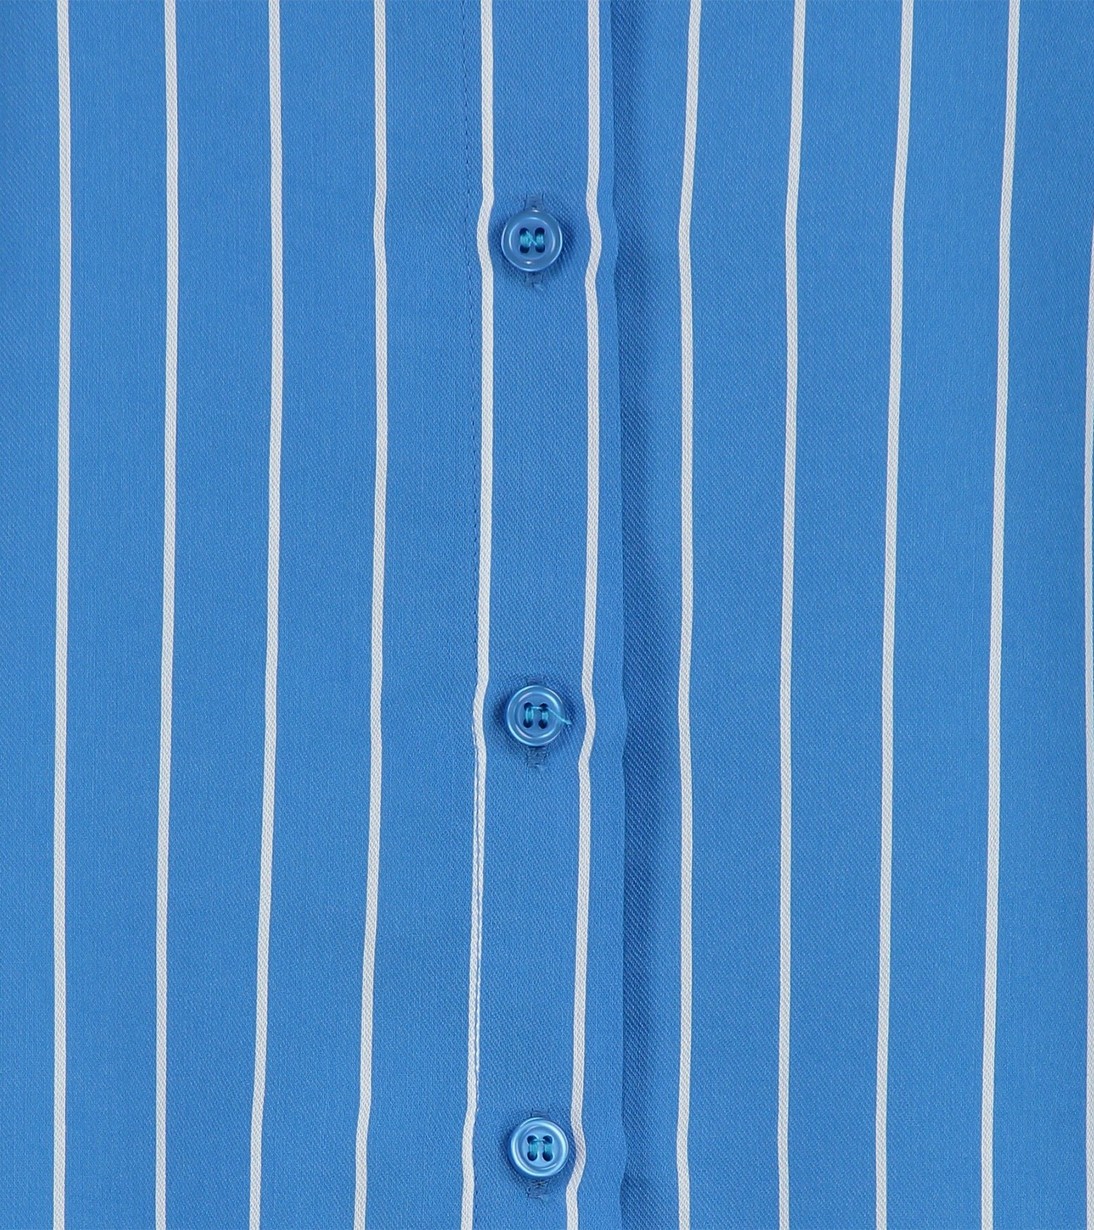 CKS Dames - ROSALINU - blouse long sleeves - blue